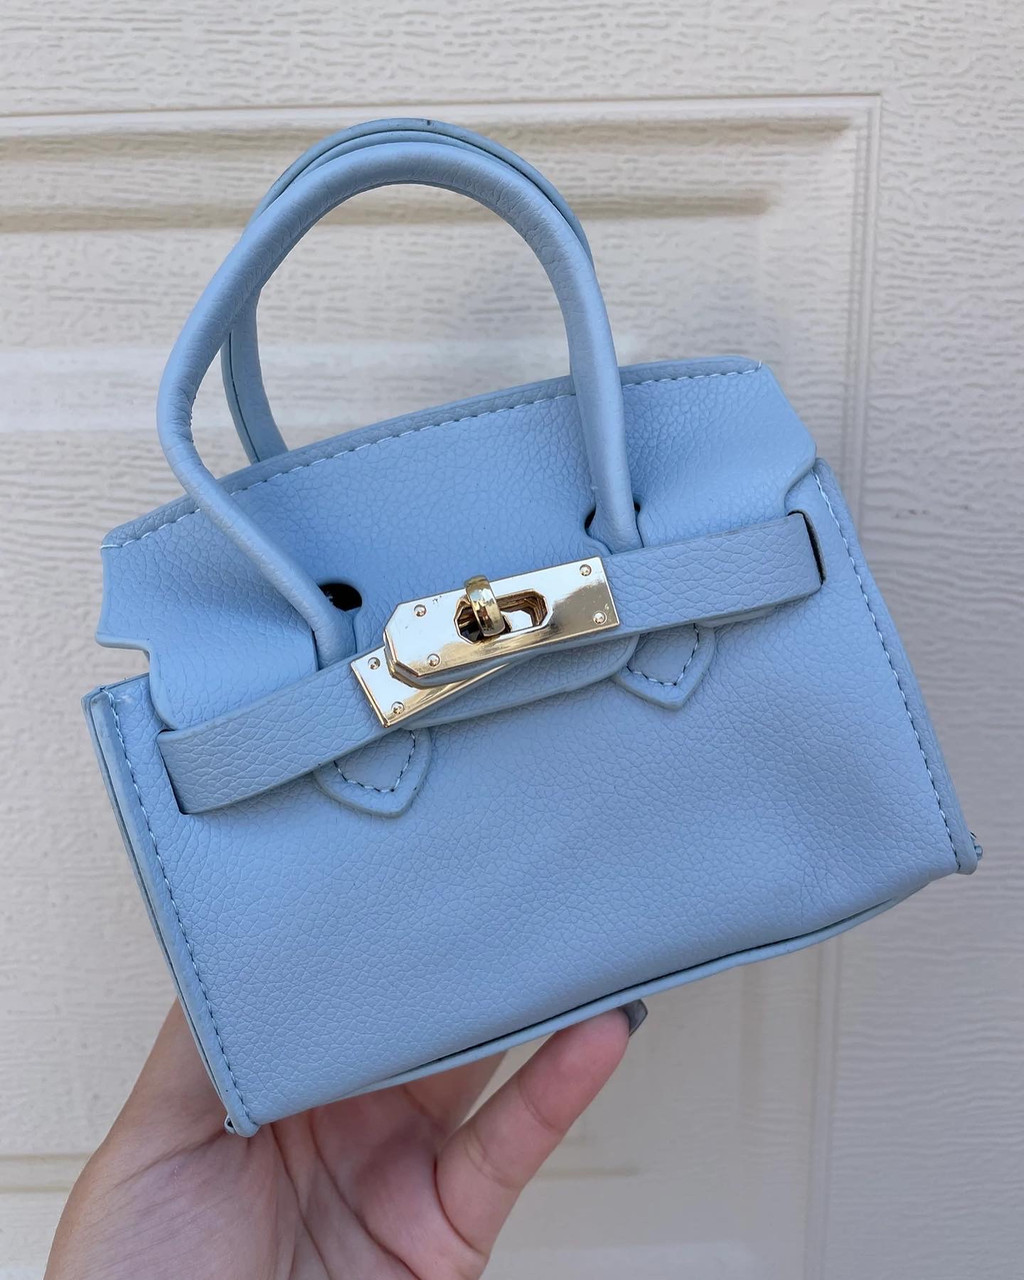 Cardi B Spends Over $30k On Designer Handbags For Her Daughter